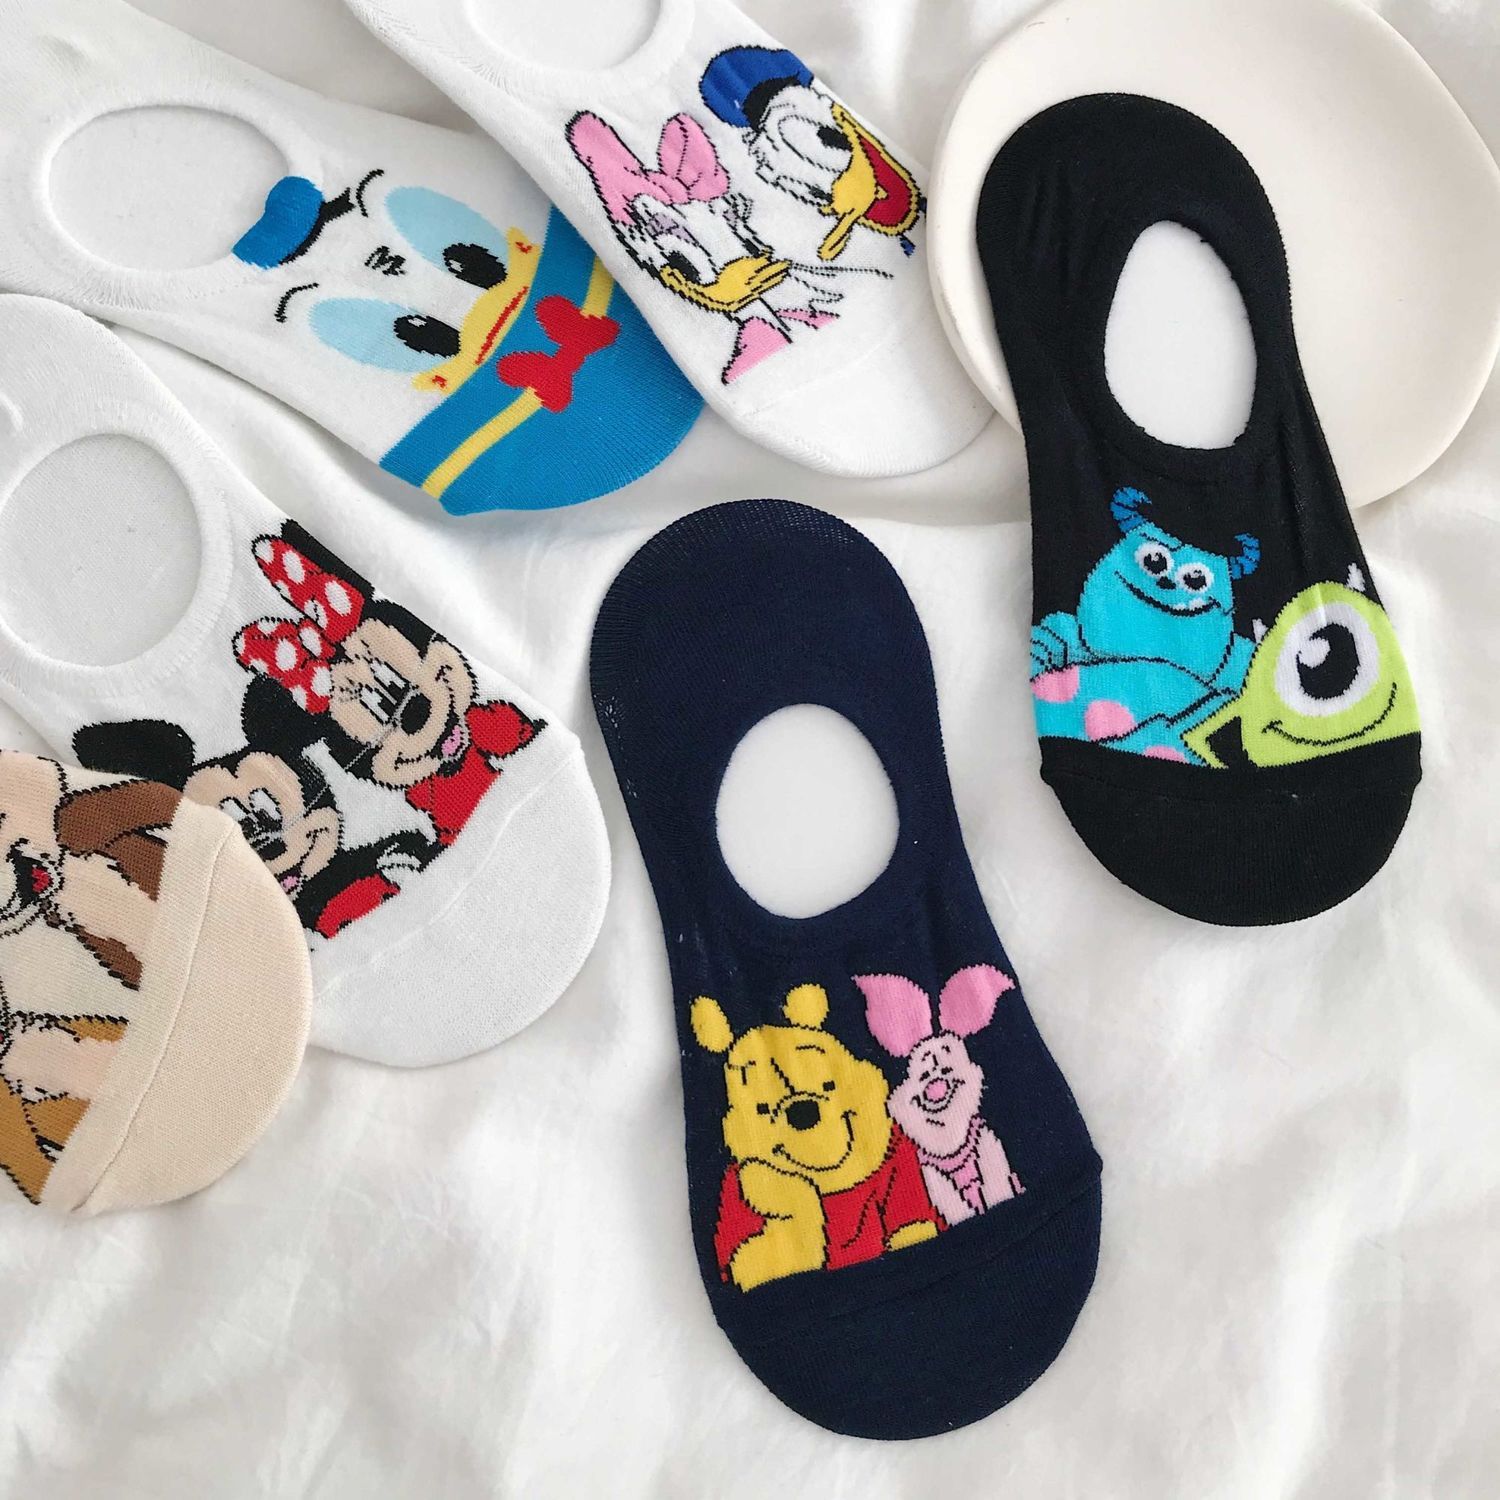 Women's Socks Korean Style Socks Female Students Spring and Summer Low-Cut Invisible Boat Socks Mickey Mouse Cute Cartoon Instagram Socks